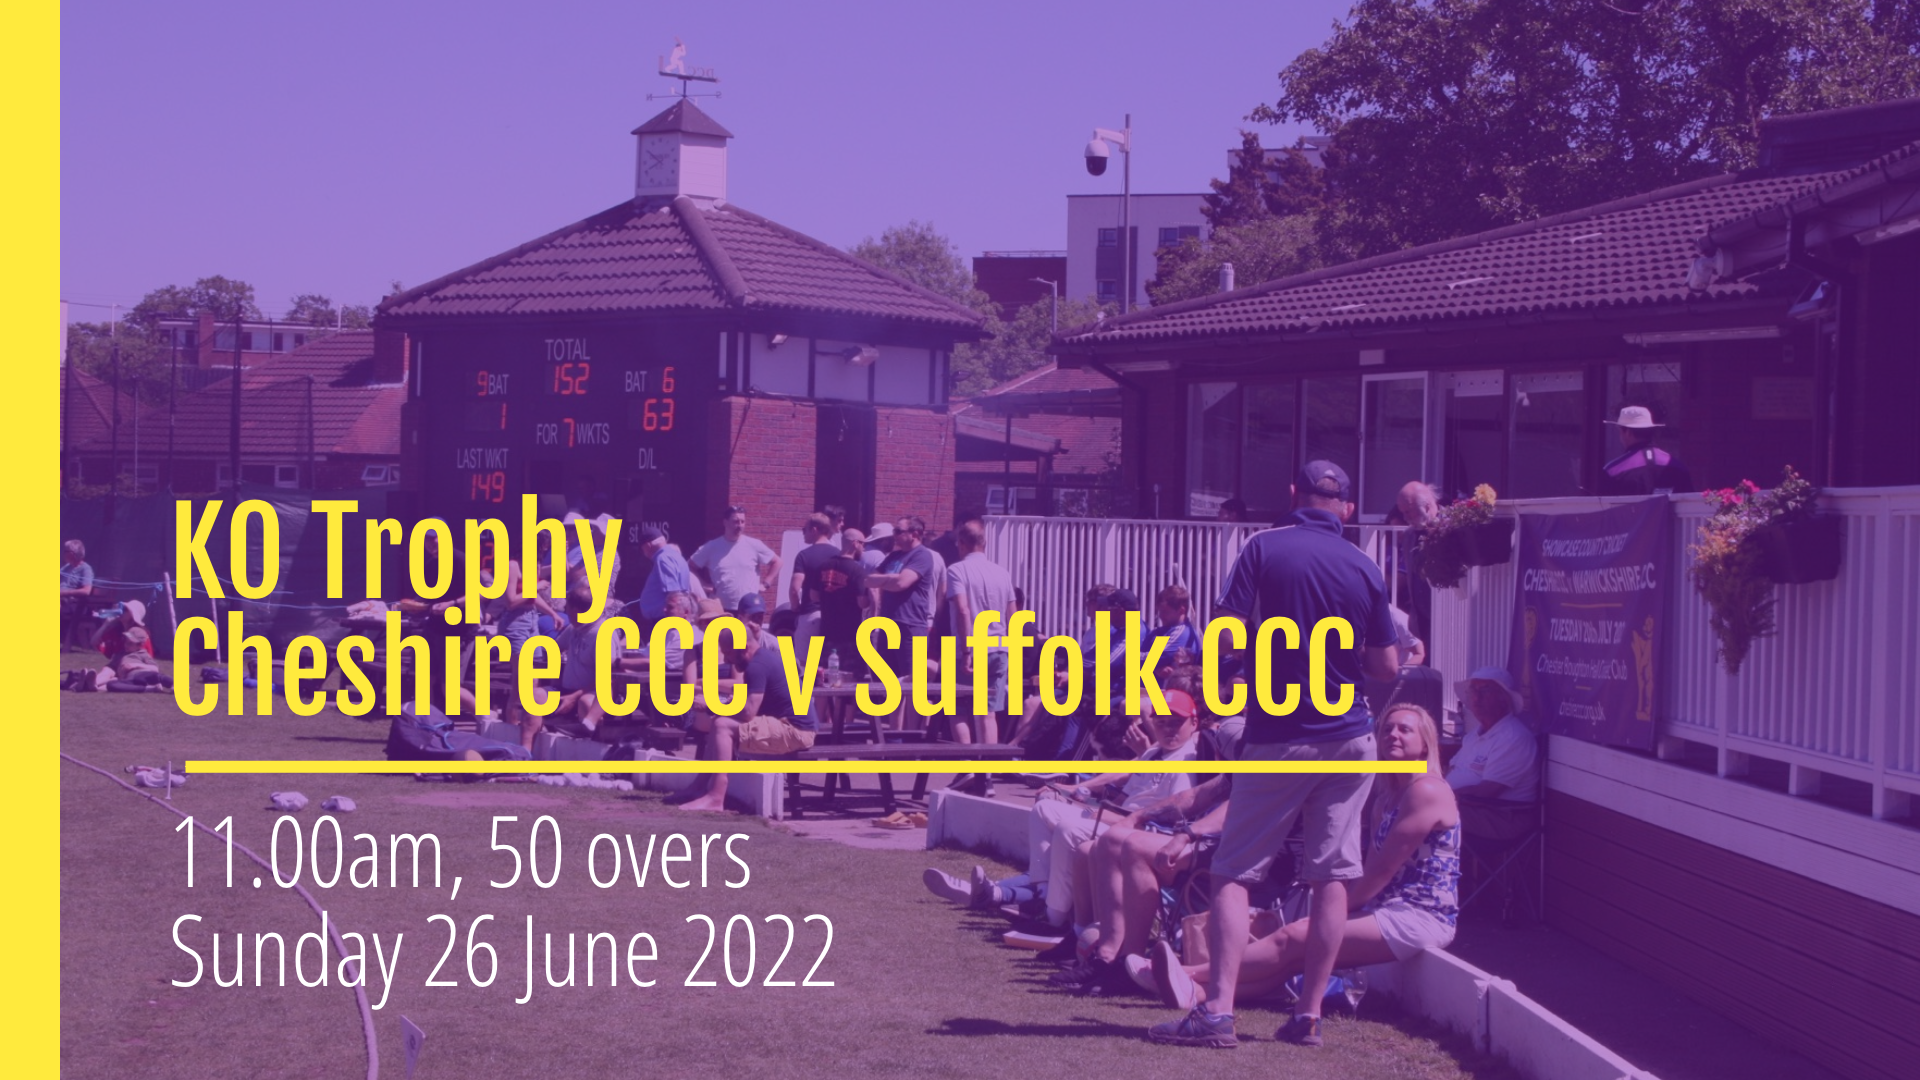 Cheshire v Suffolk - Winner takes all! Didsbury CC, Sunday 26 June